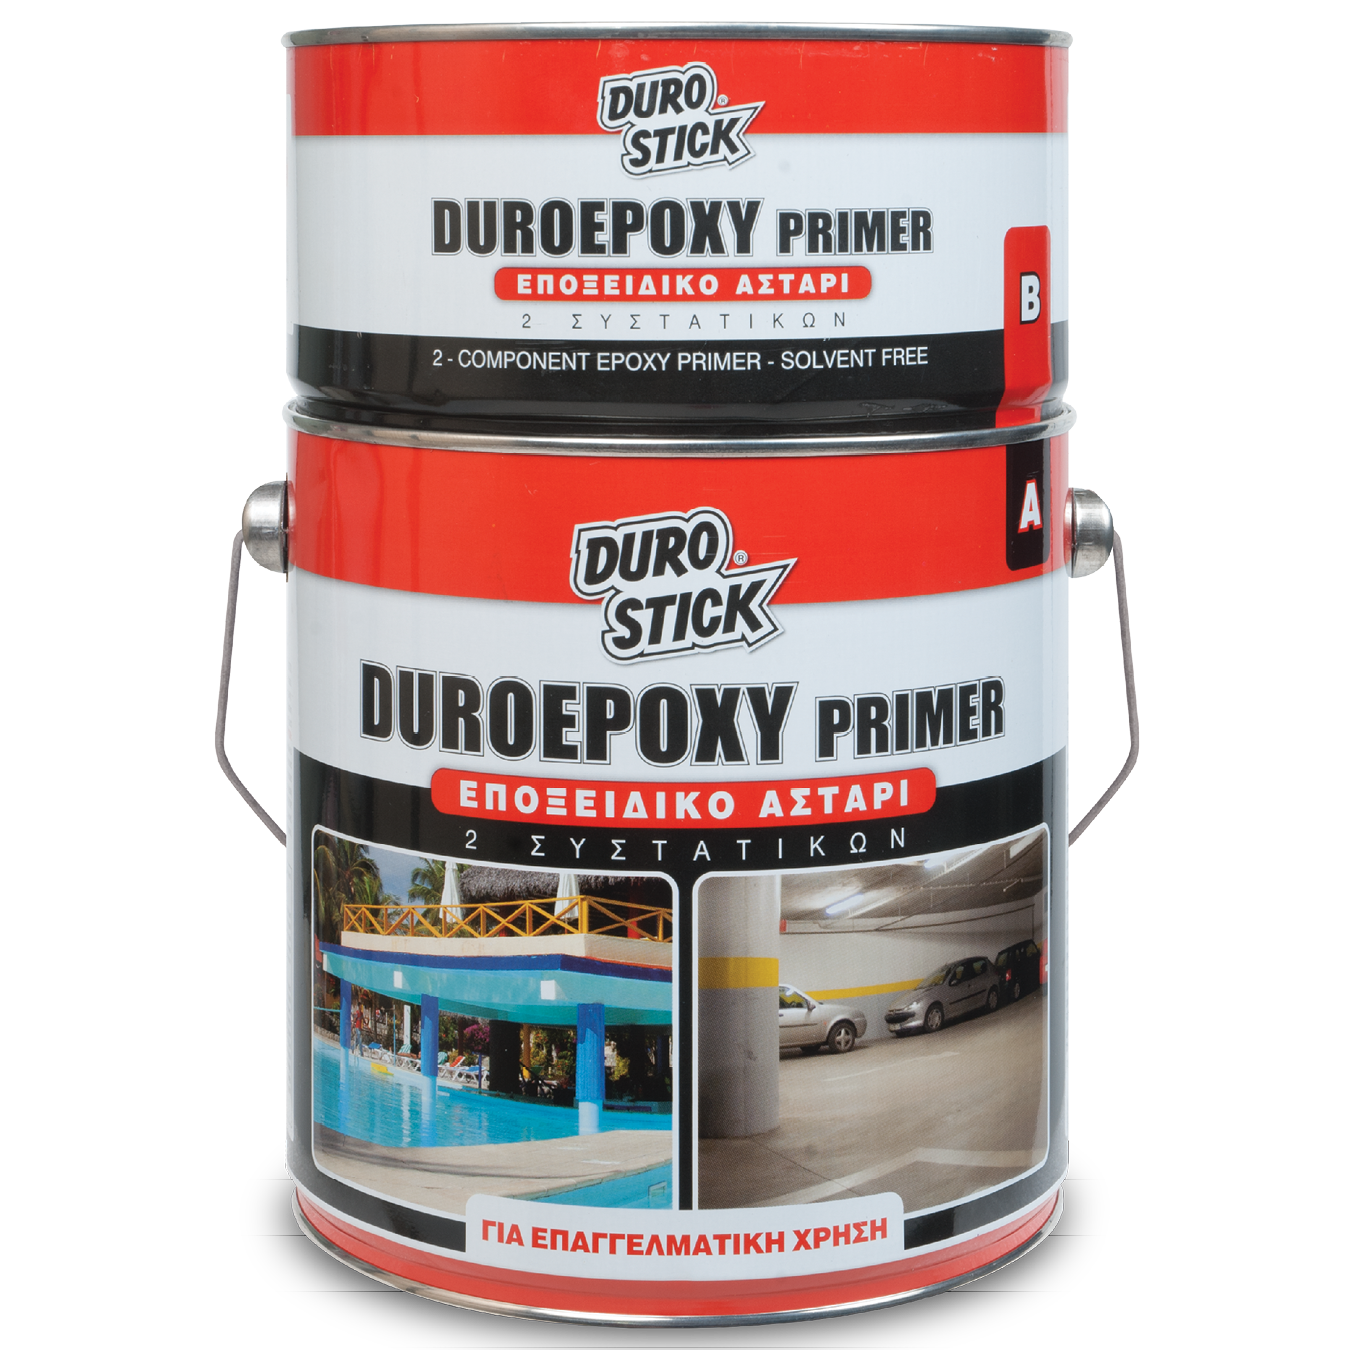 Duroepoxy Primer Image